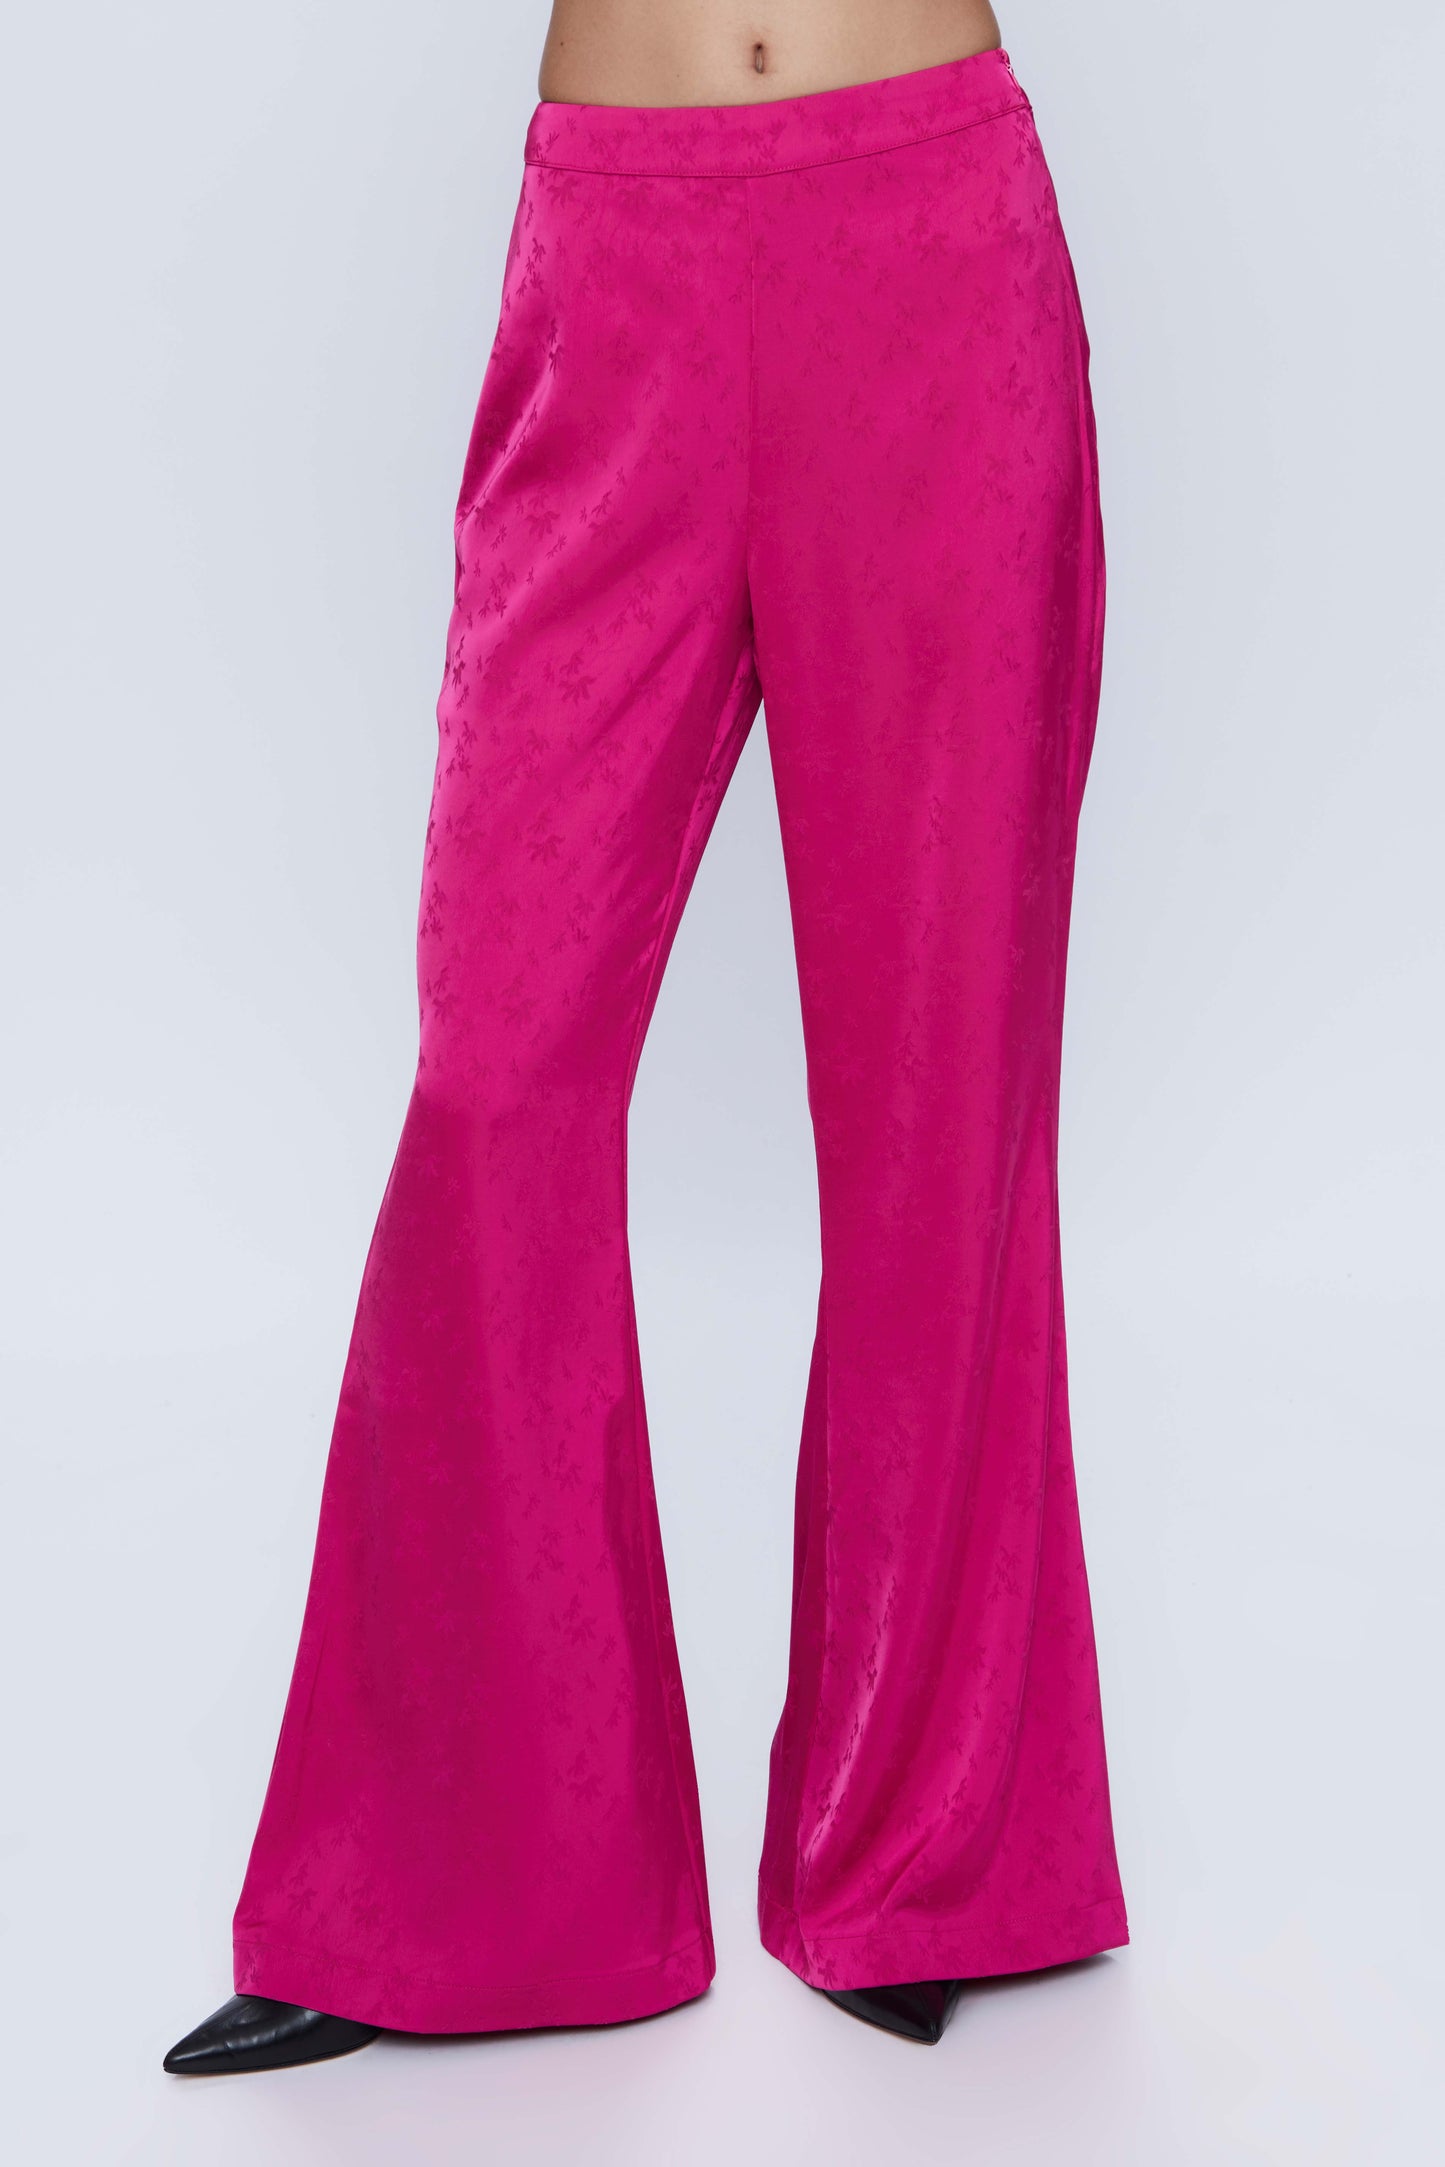 Flowing suit pants in pink jacquard